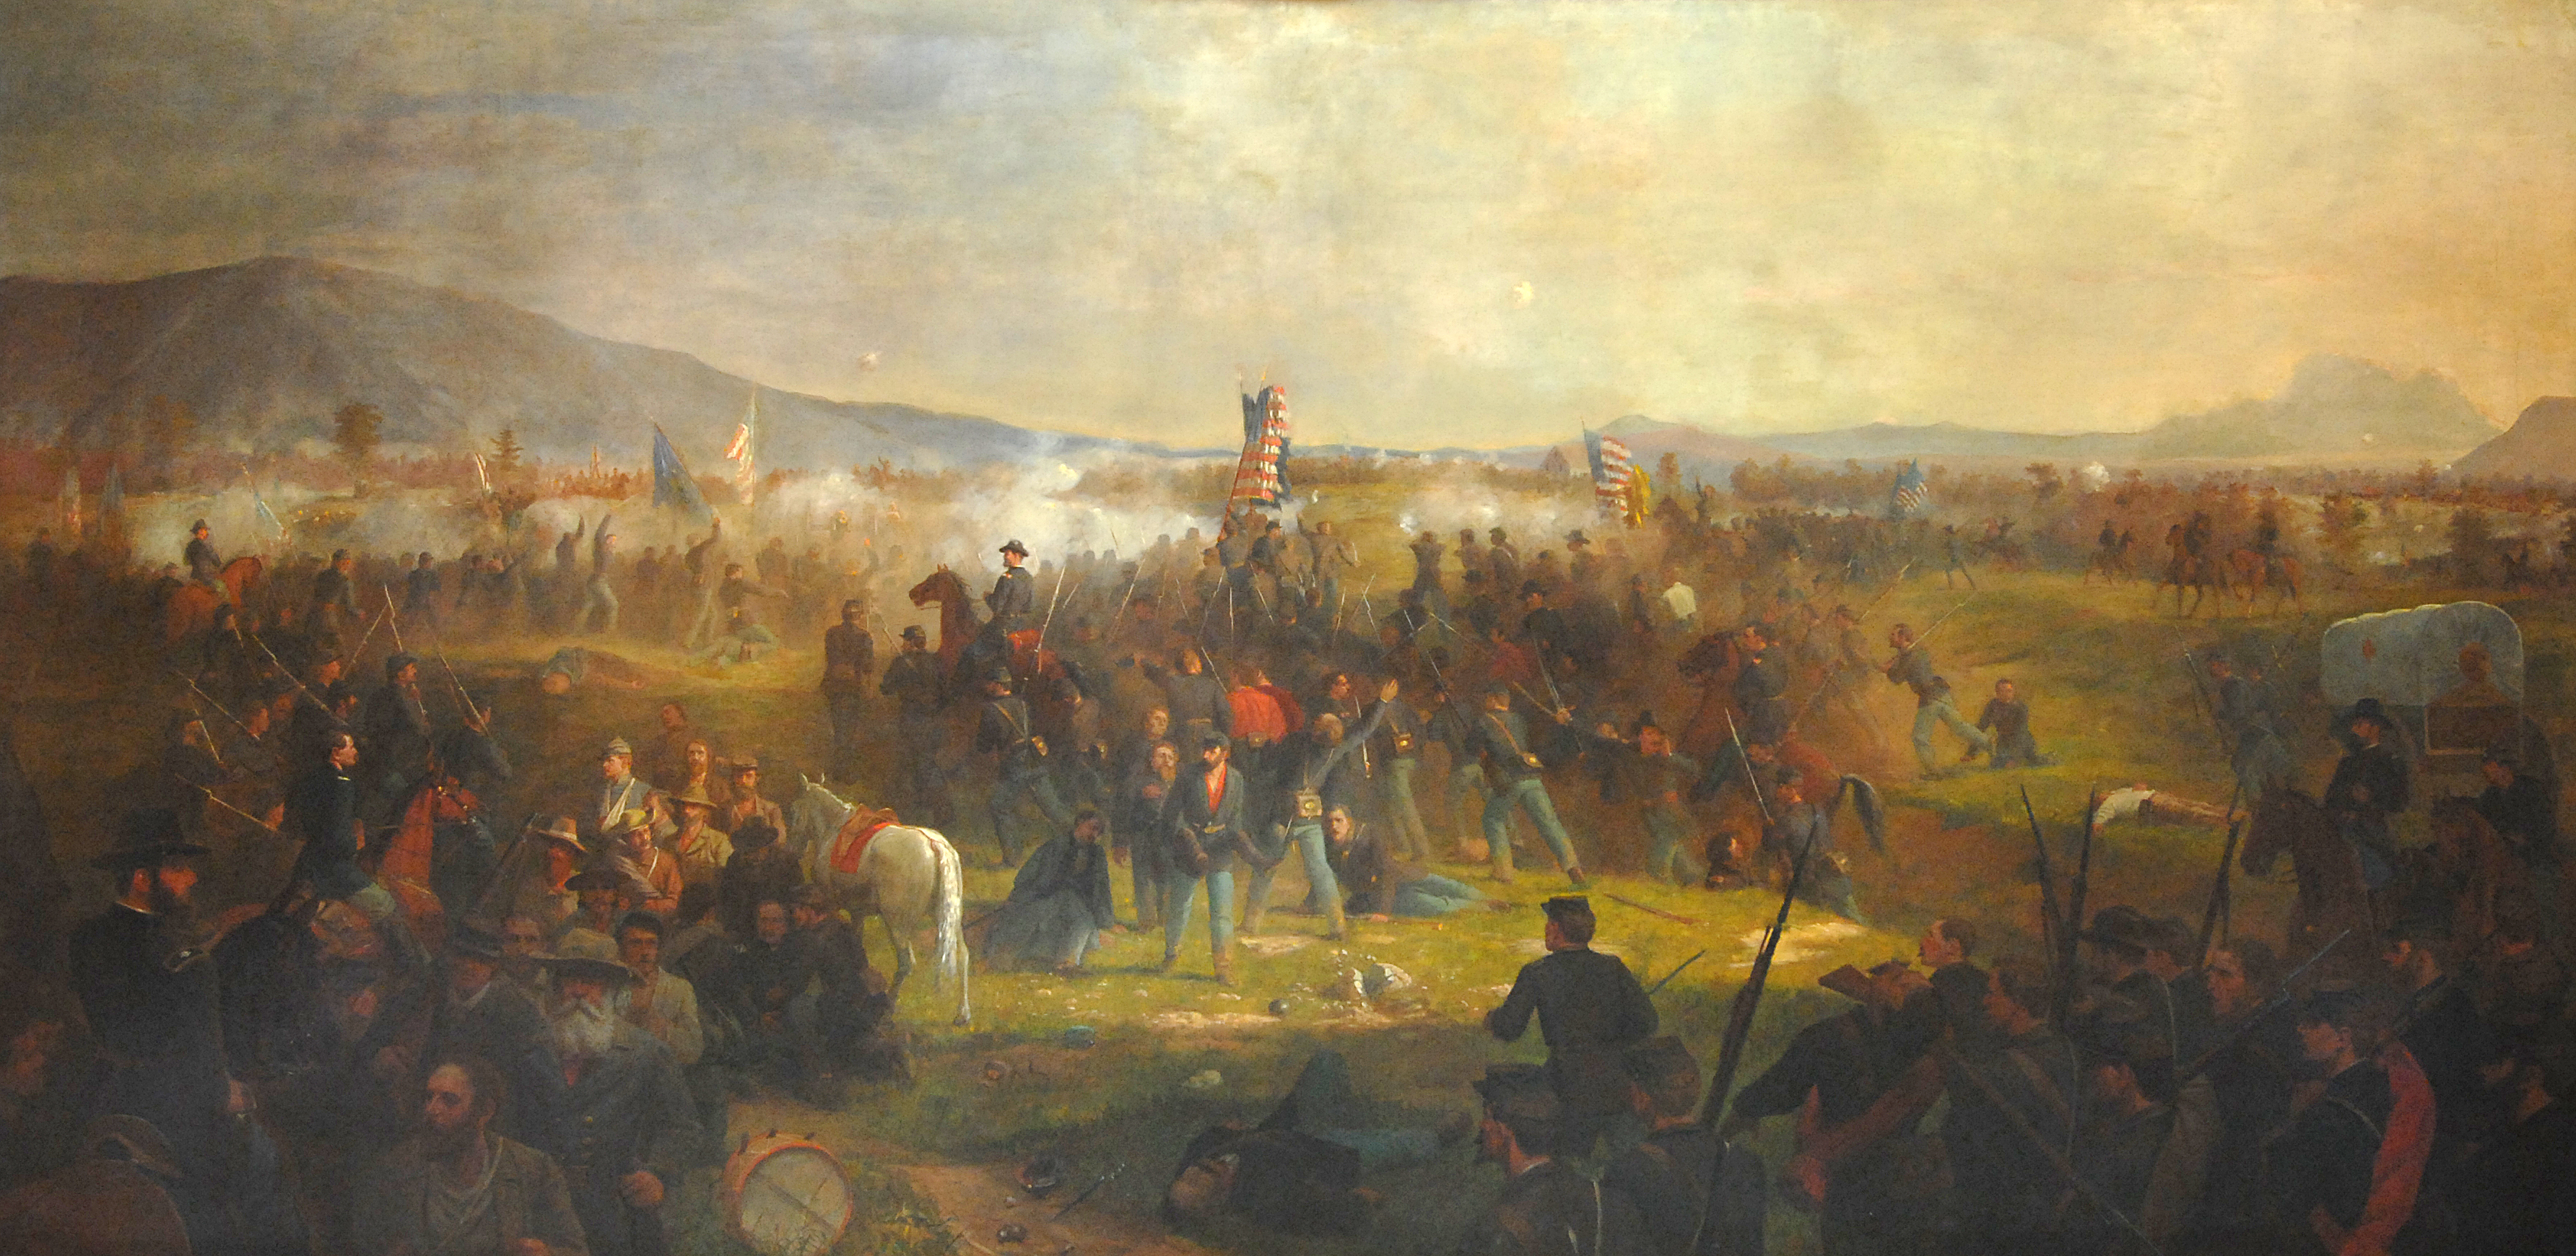 Overview of the Battle of Cedar Creek - Cedar Creek & Belle Grove